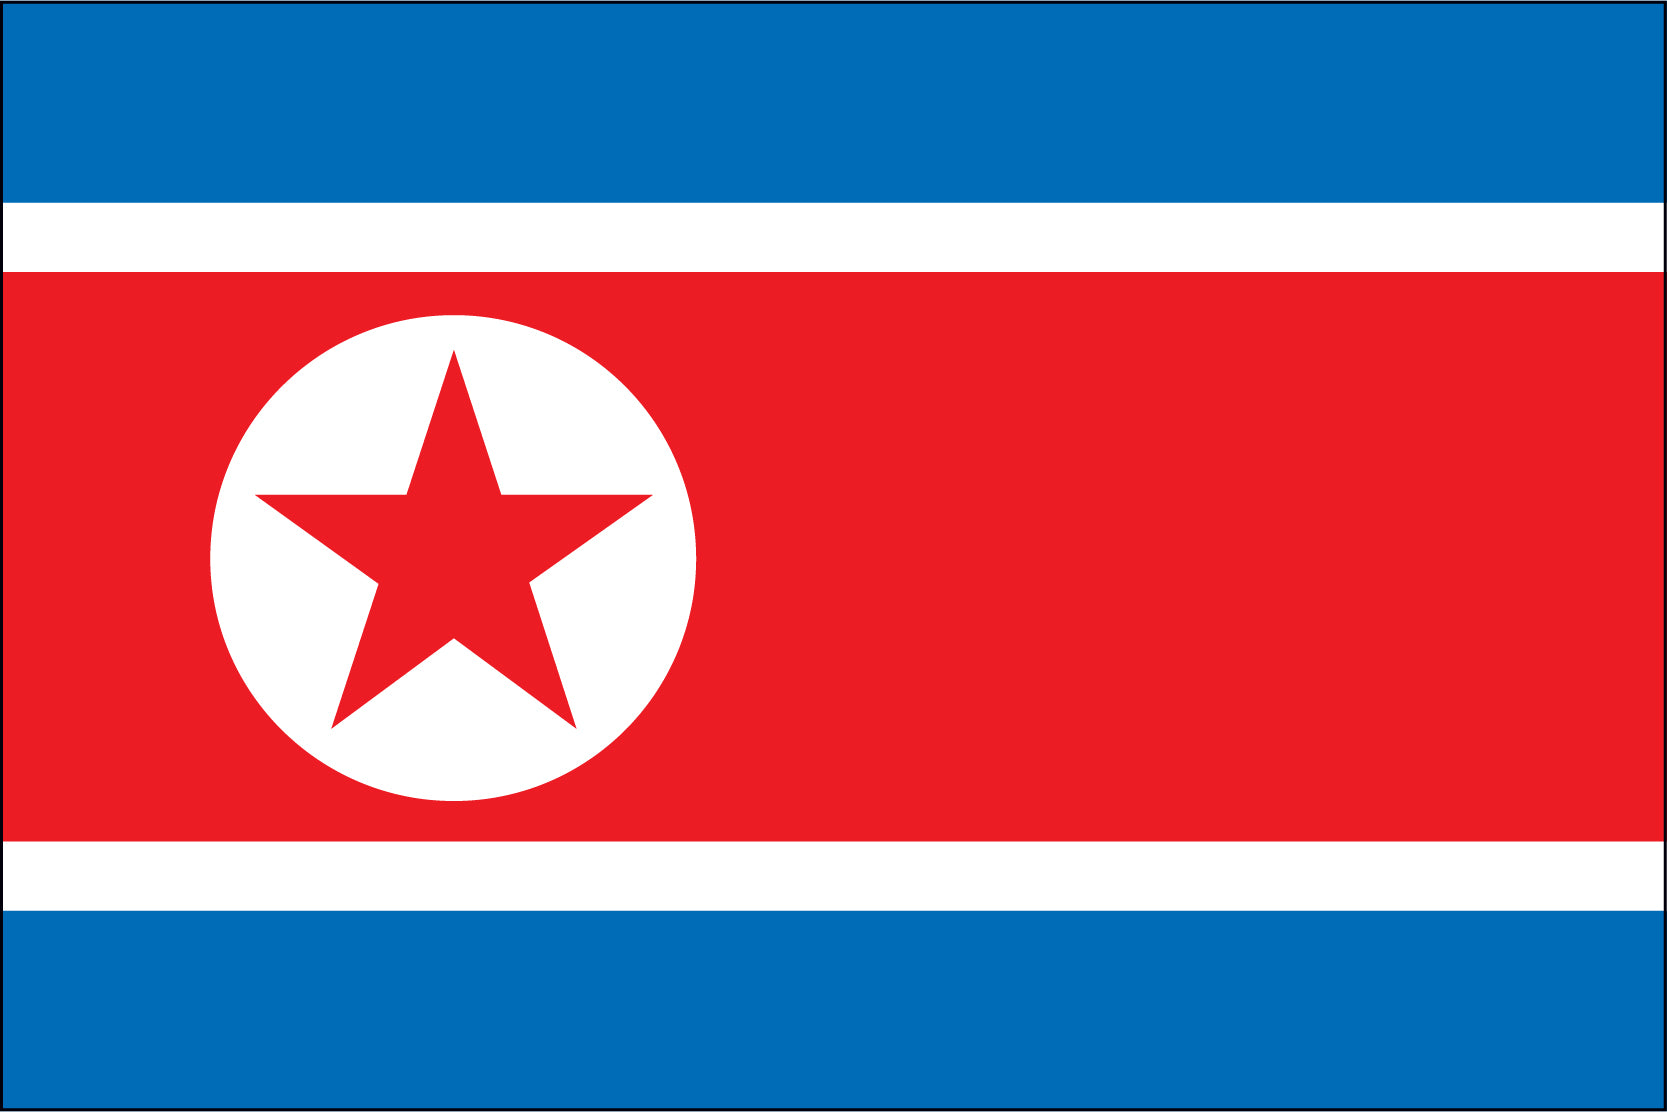 Korea (North) Flag